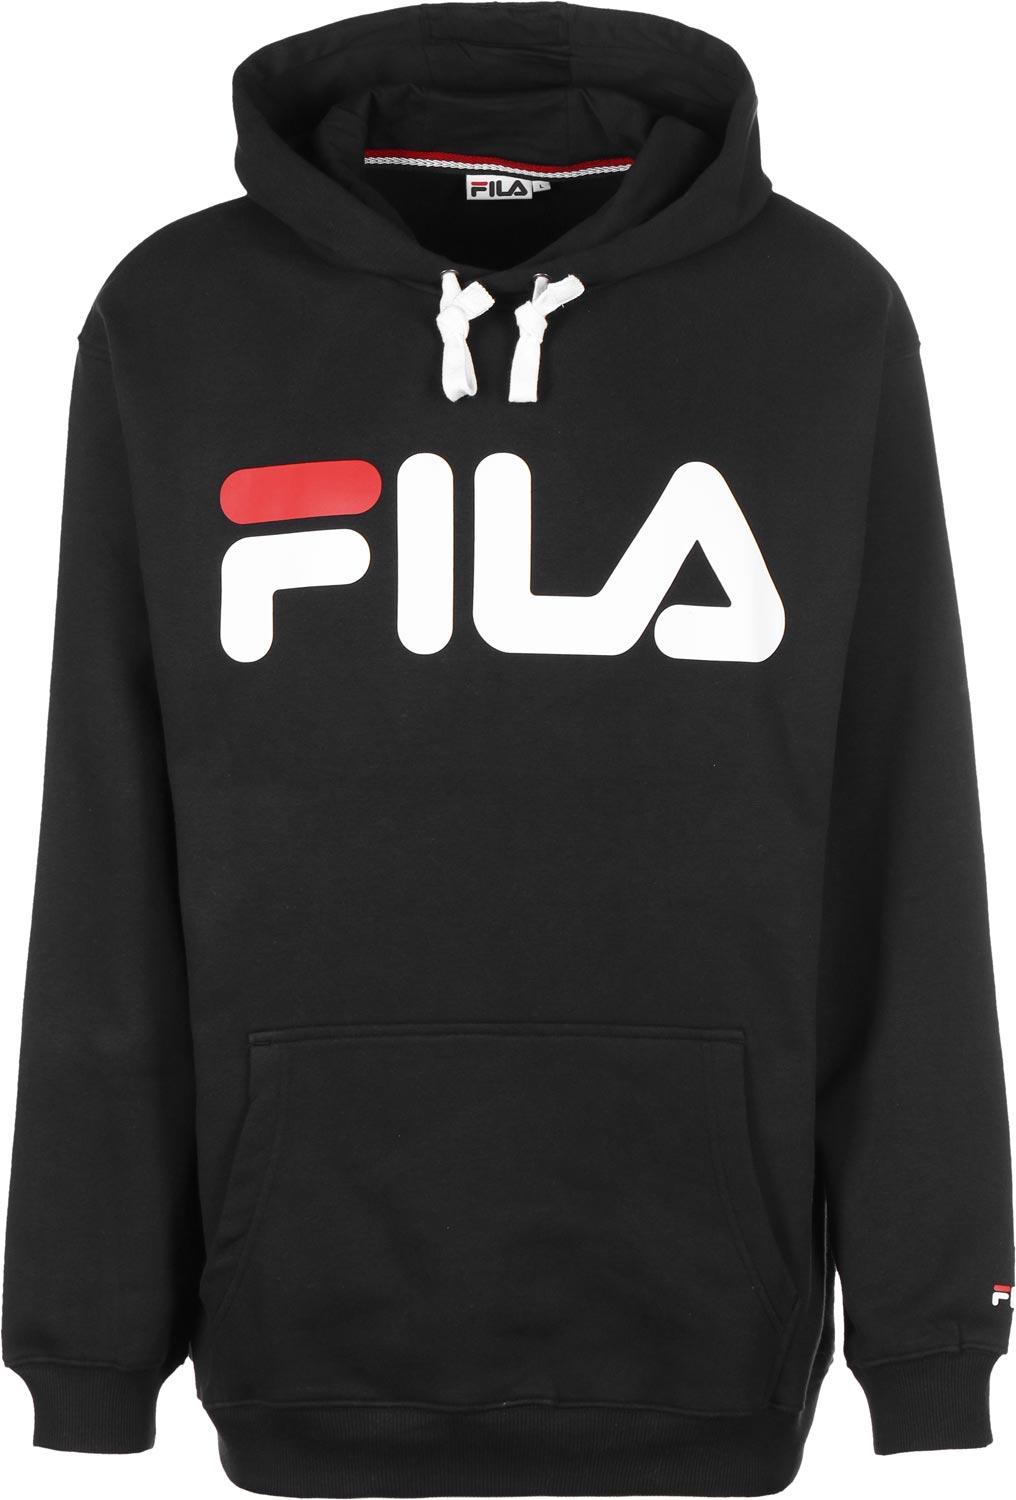 Old Fila Logo - LogoDix